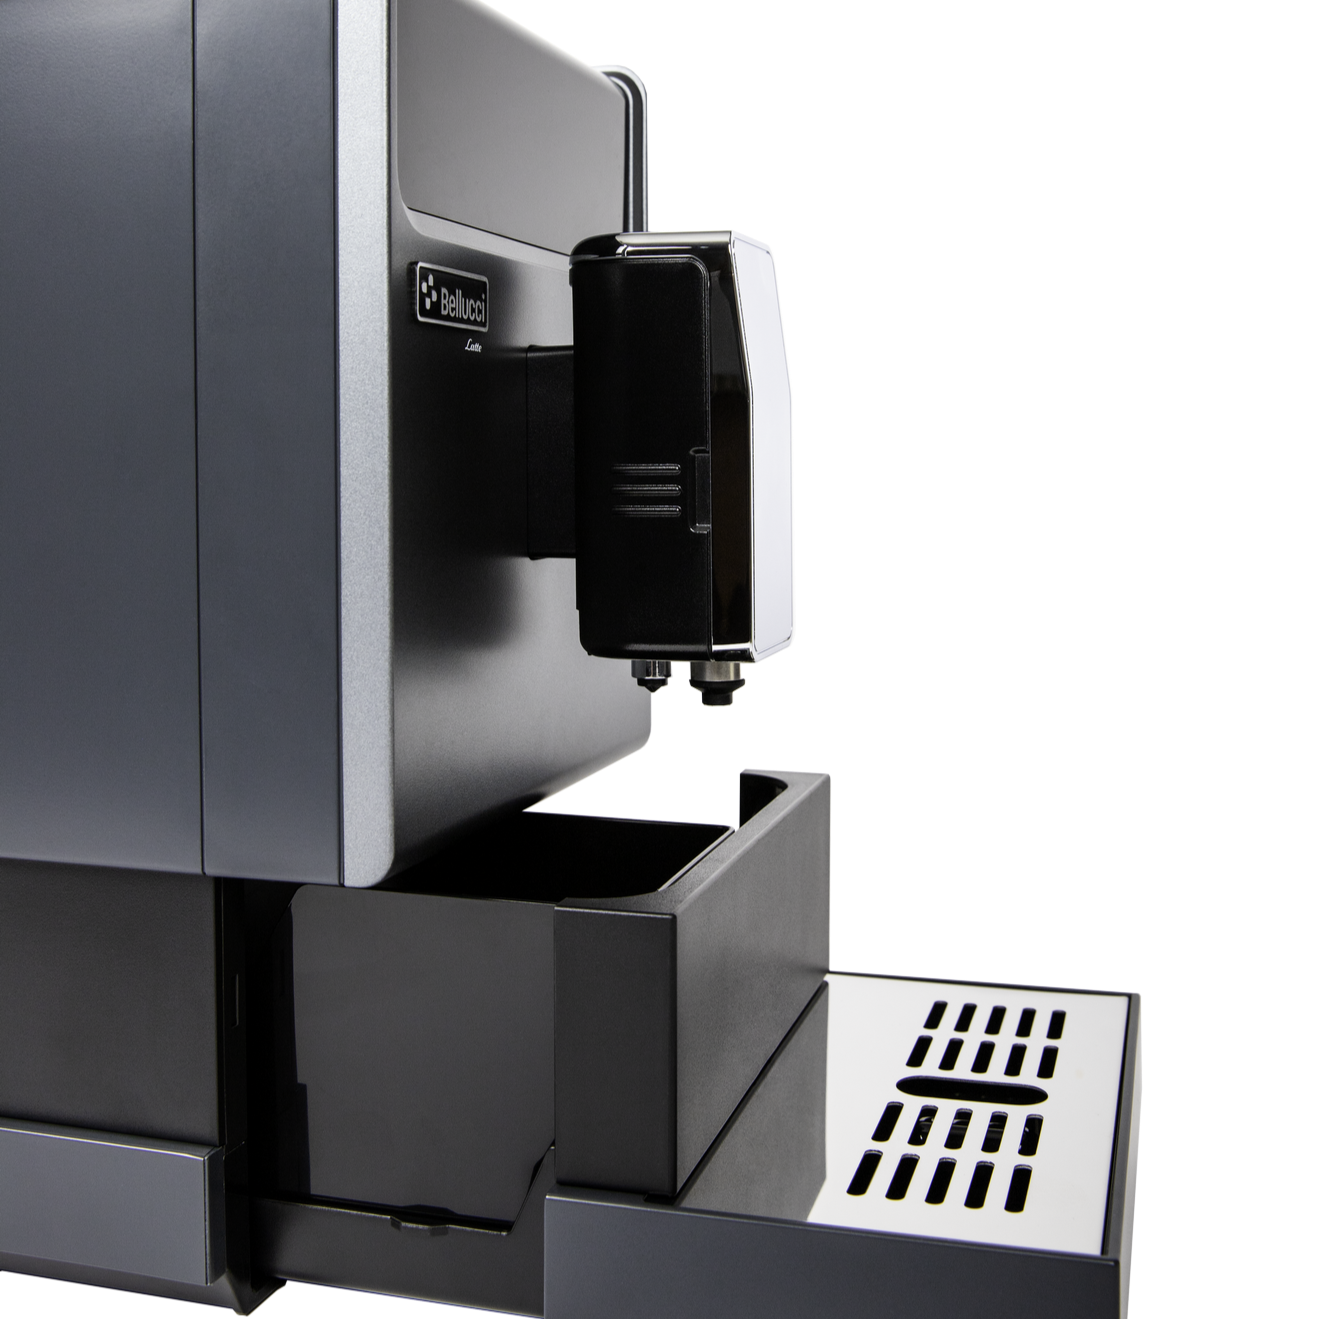 Bellucci | machine espresso automatique Slim Latte